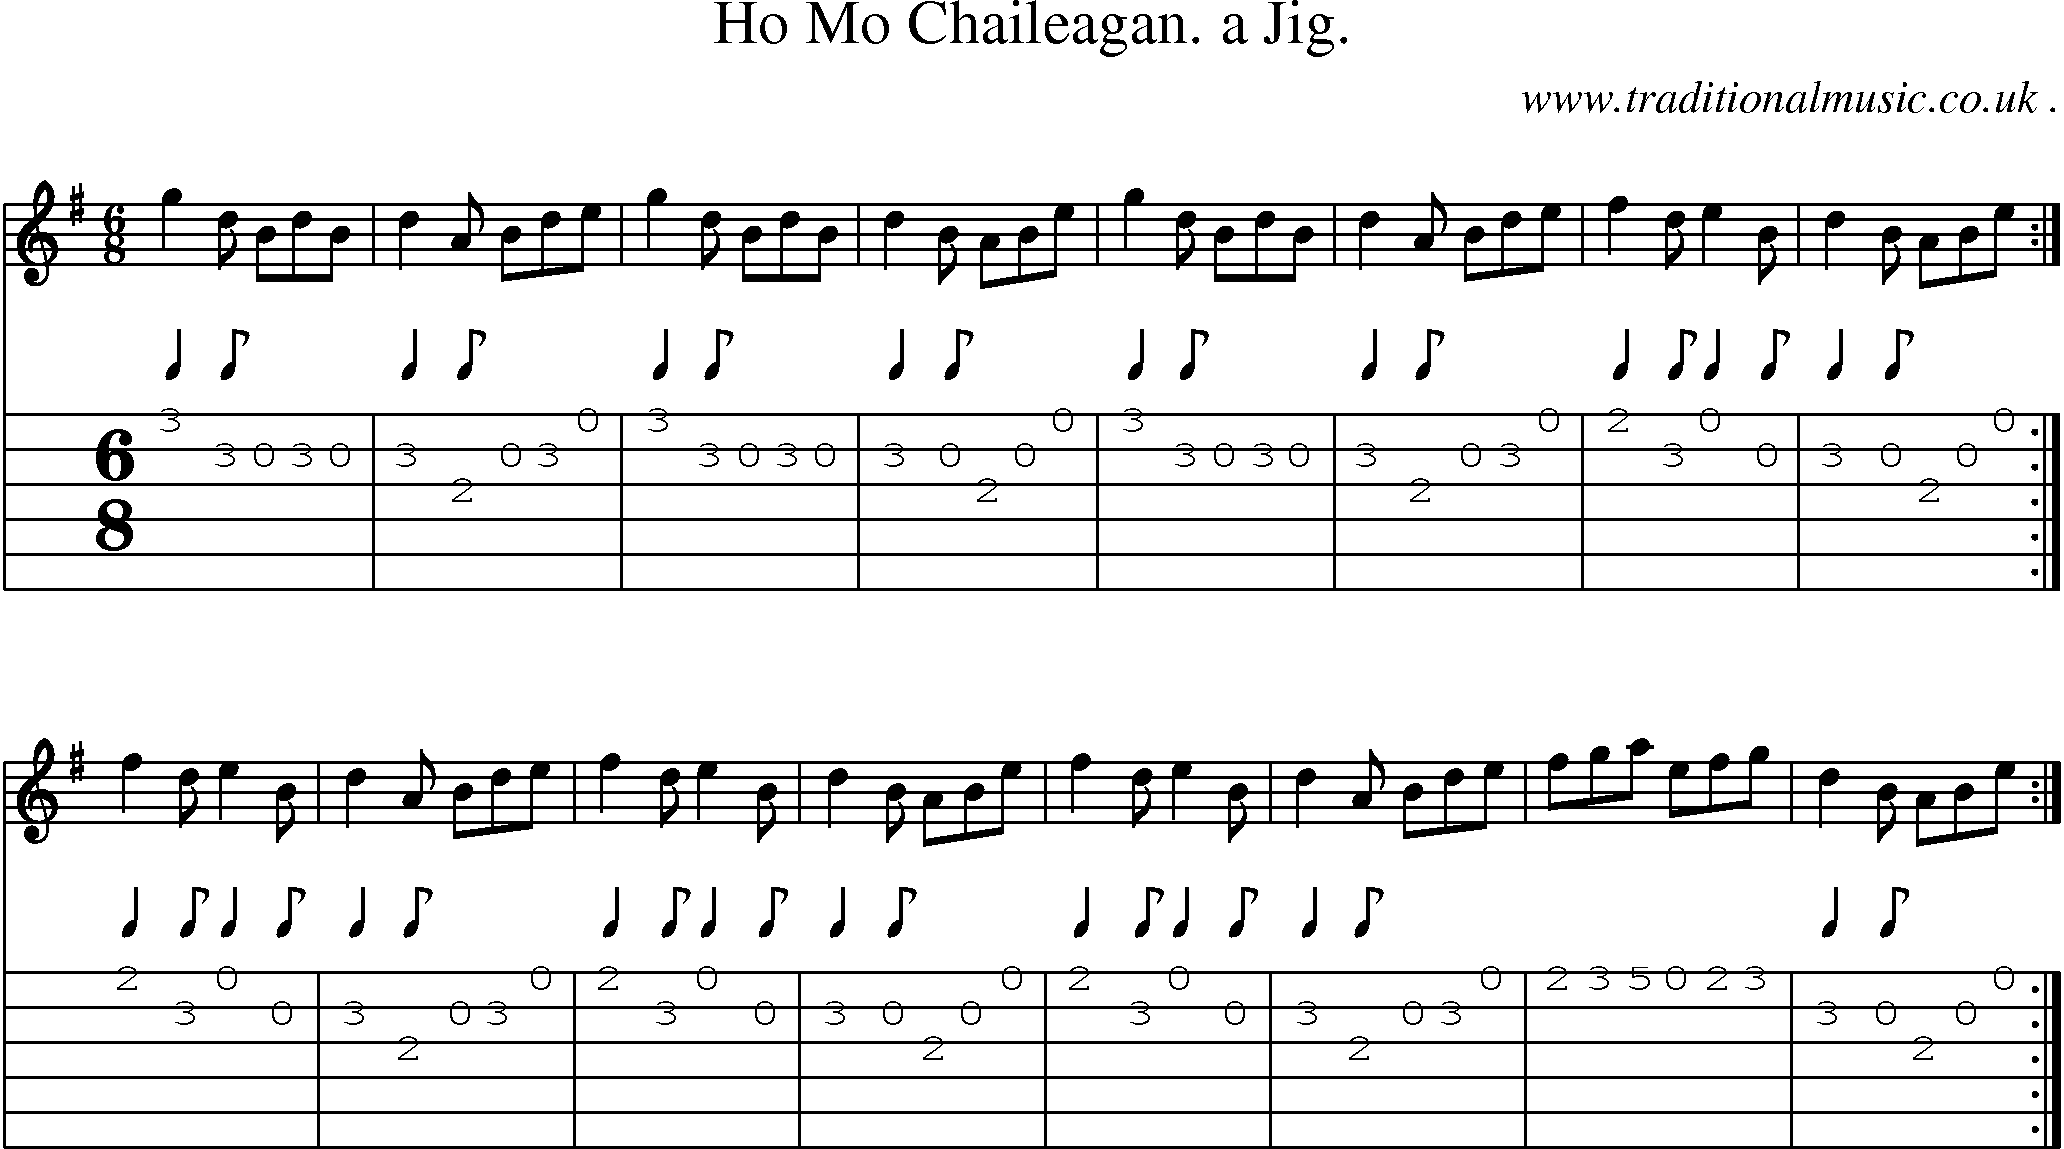 Sheet-Music and Guitar Tabs for Ho Mo Chaileagan A Jig